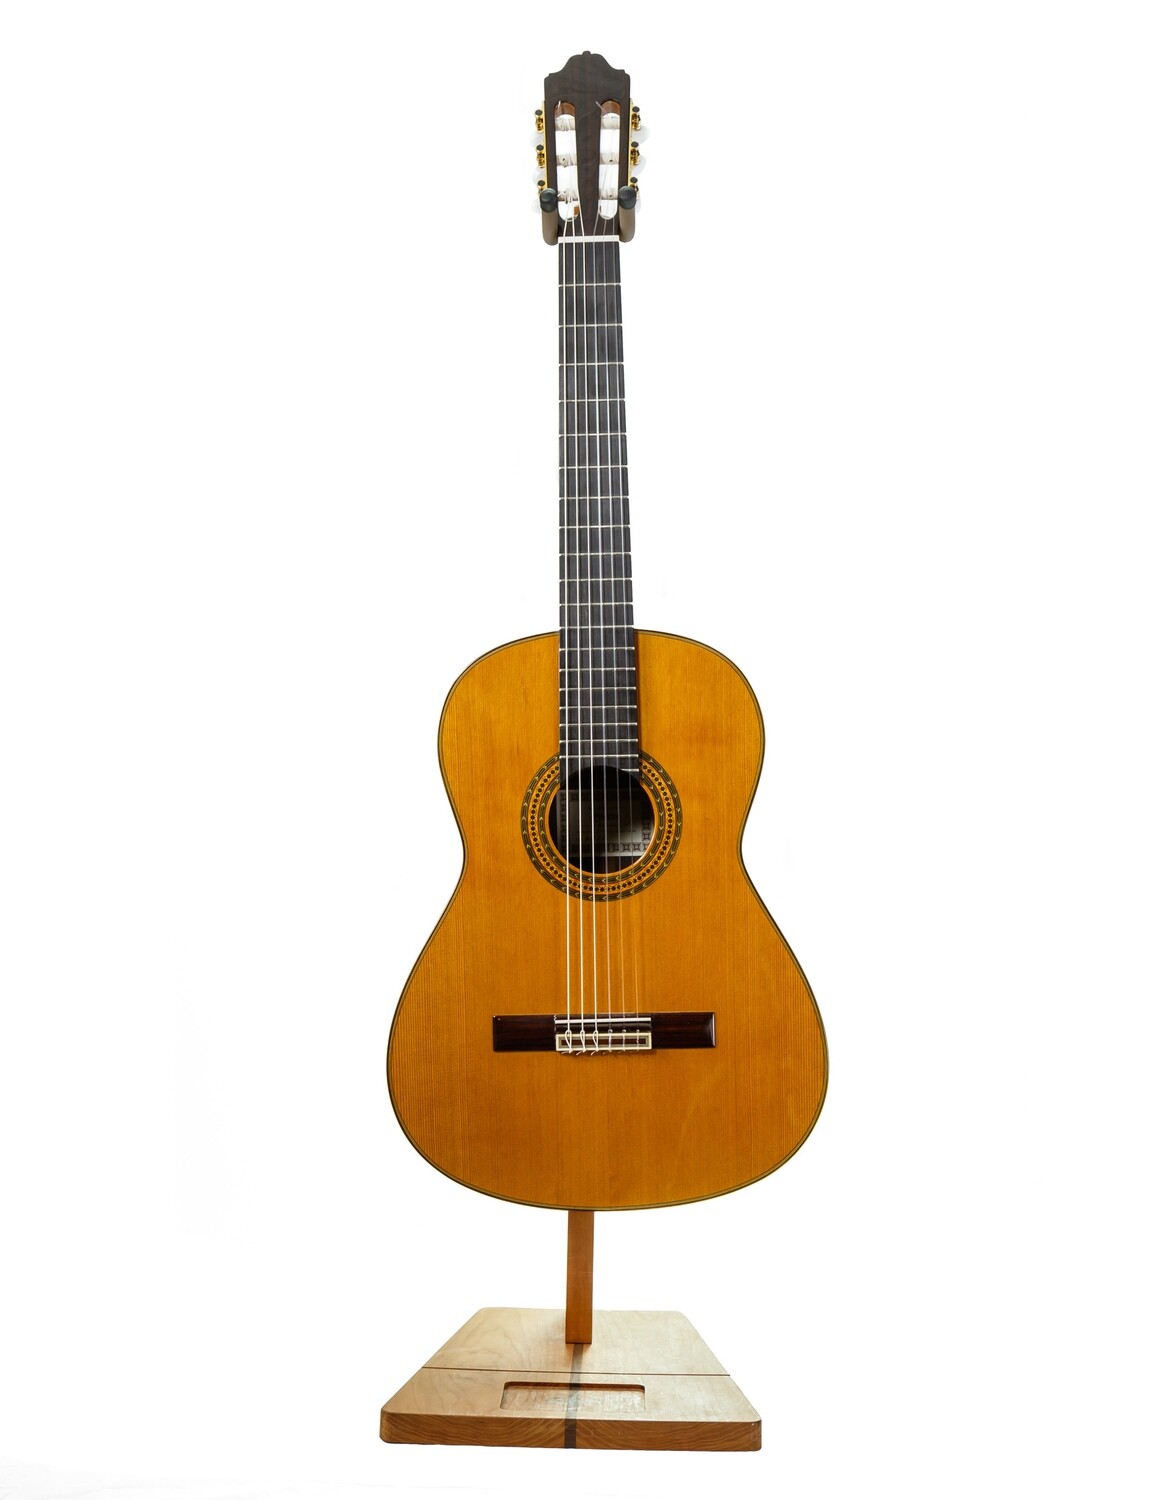 Estevé Alegria - All solid wood Classical Guitar - Cedar top, Indian Rosewood Back/Sides - Hand made in Valencia, Spain